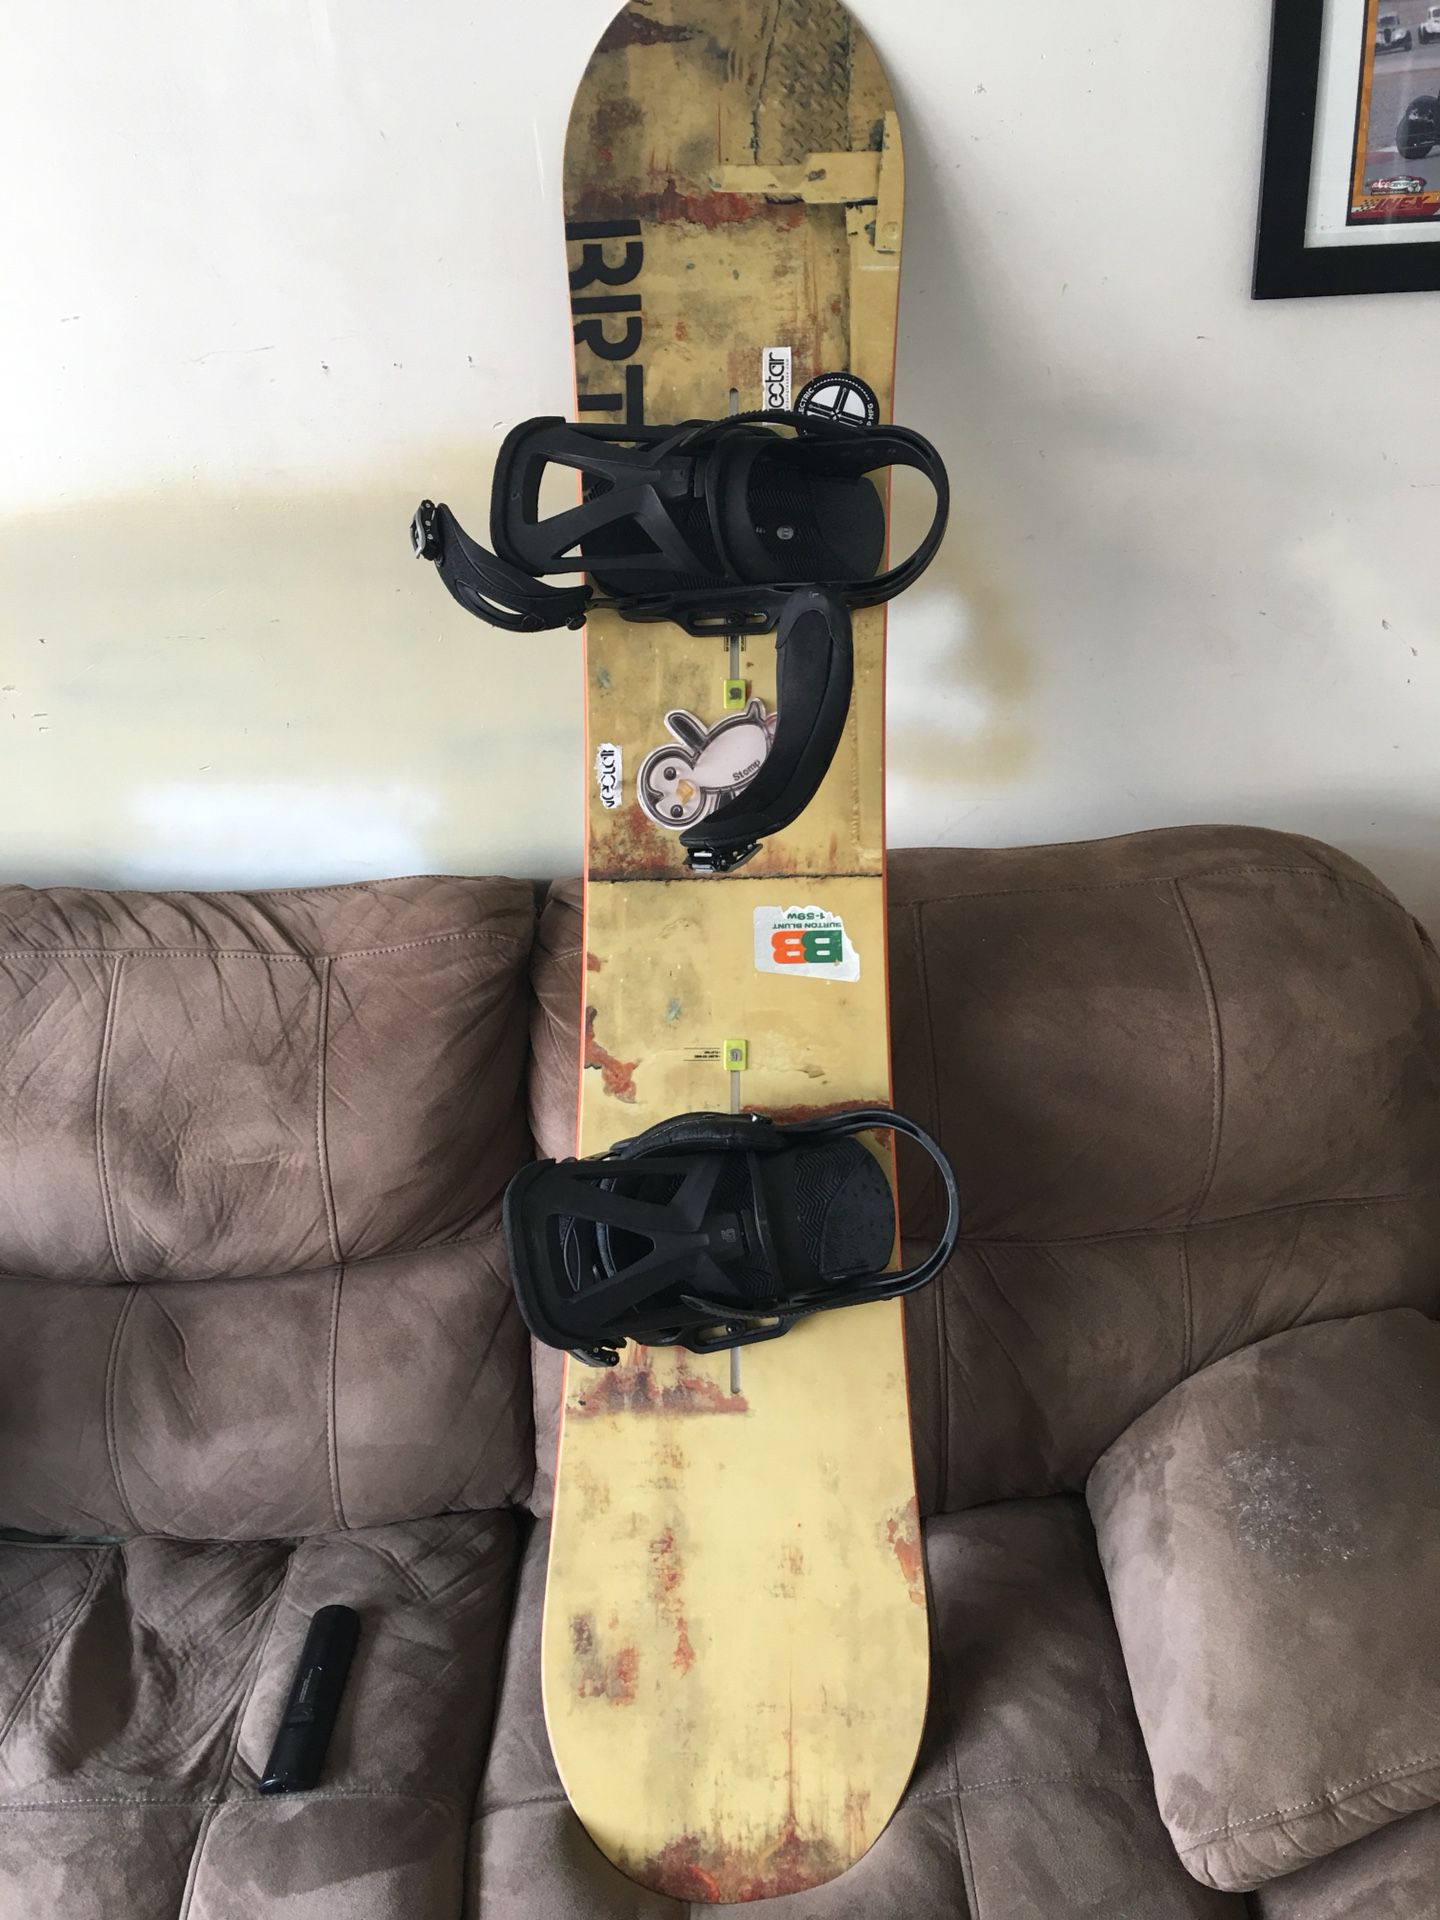 Premium used Burton Snowboard with bindings and bag 300$ OBO